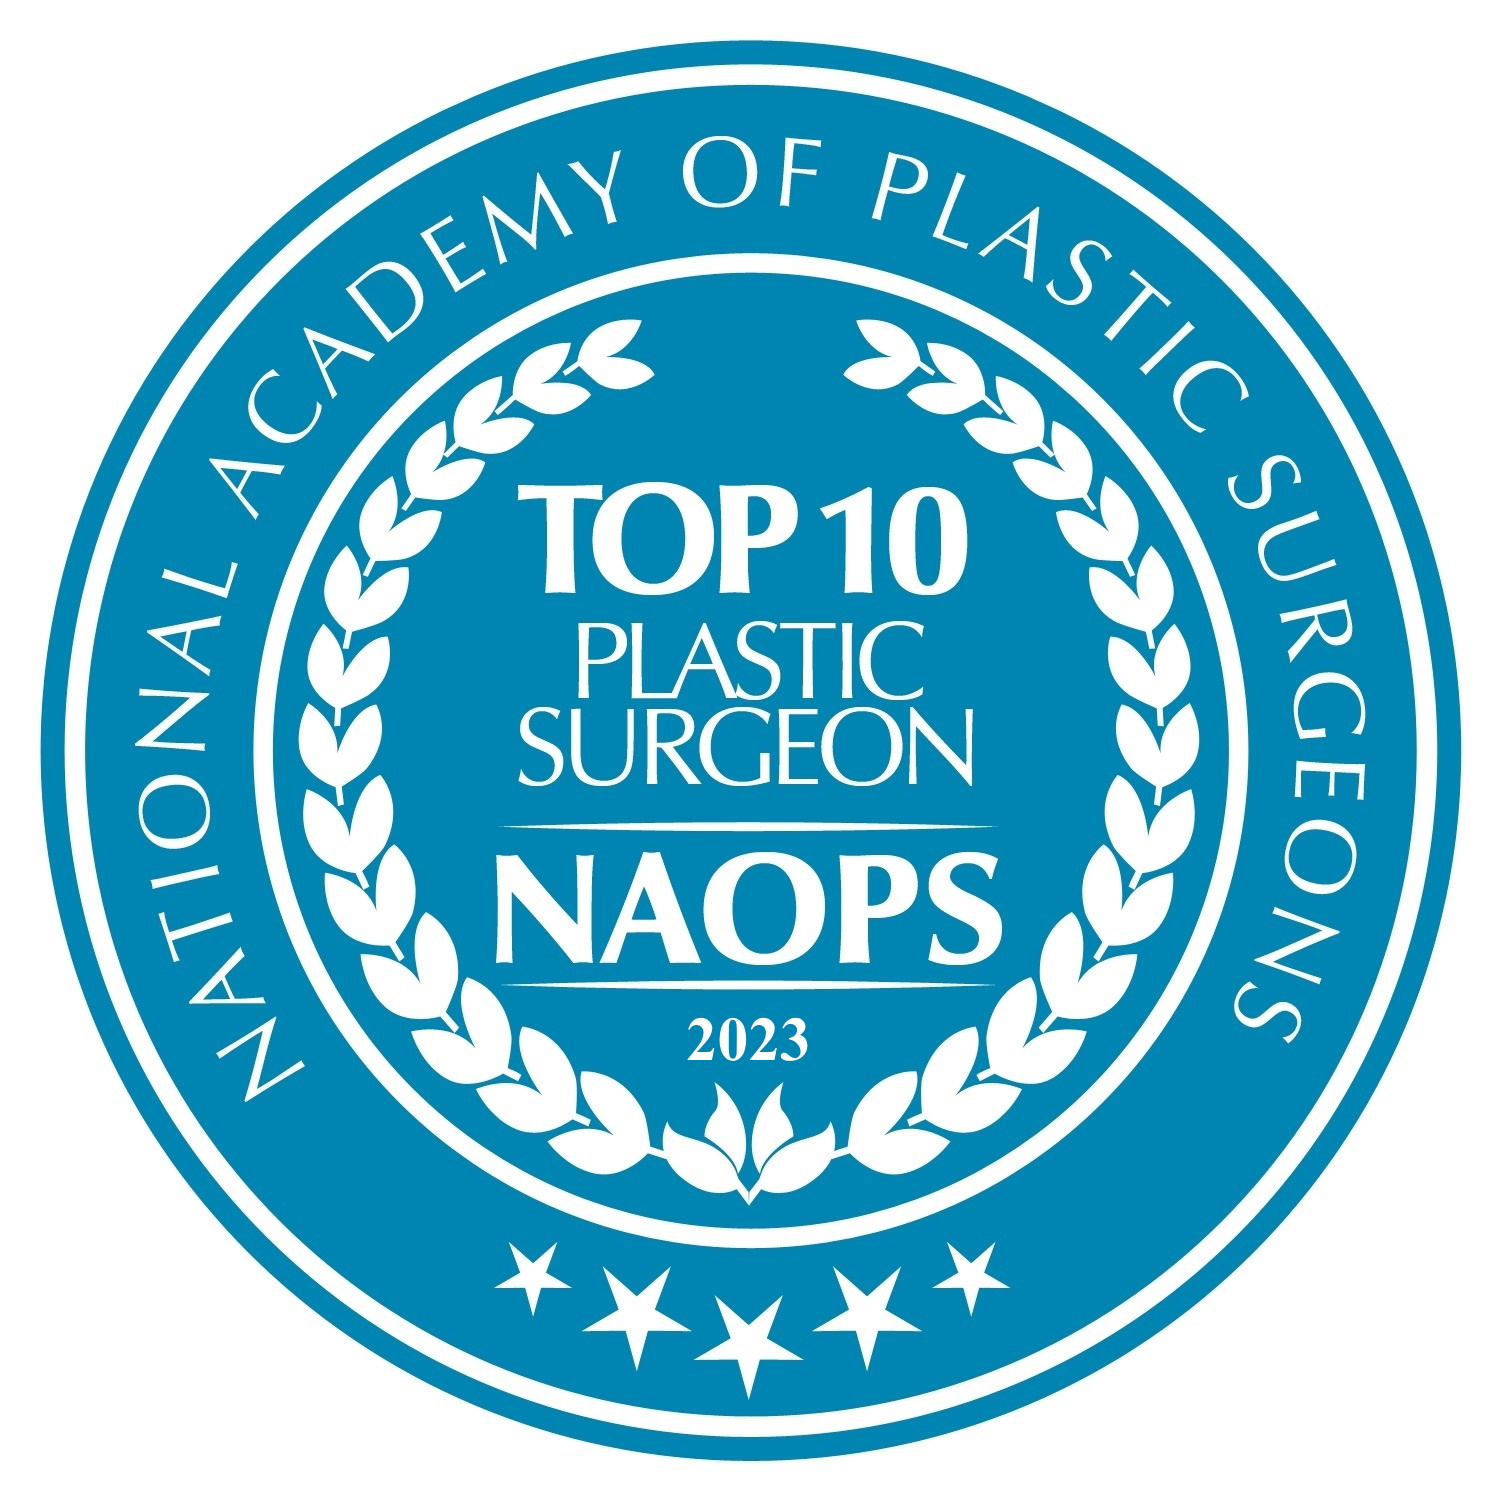 Top 10 Plastic Surgeons 2023 National Academy of Plastic Surgeons